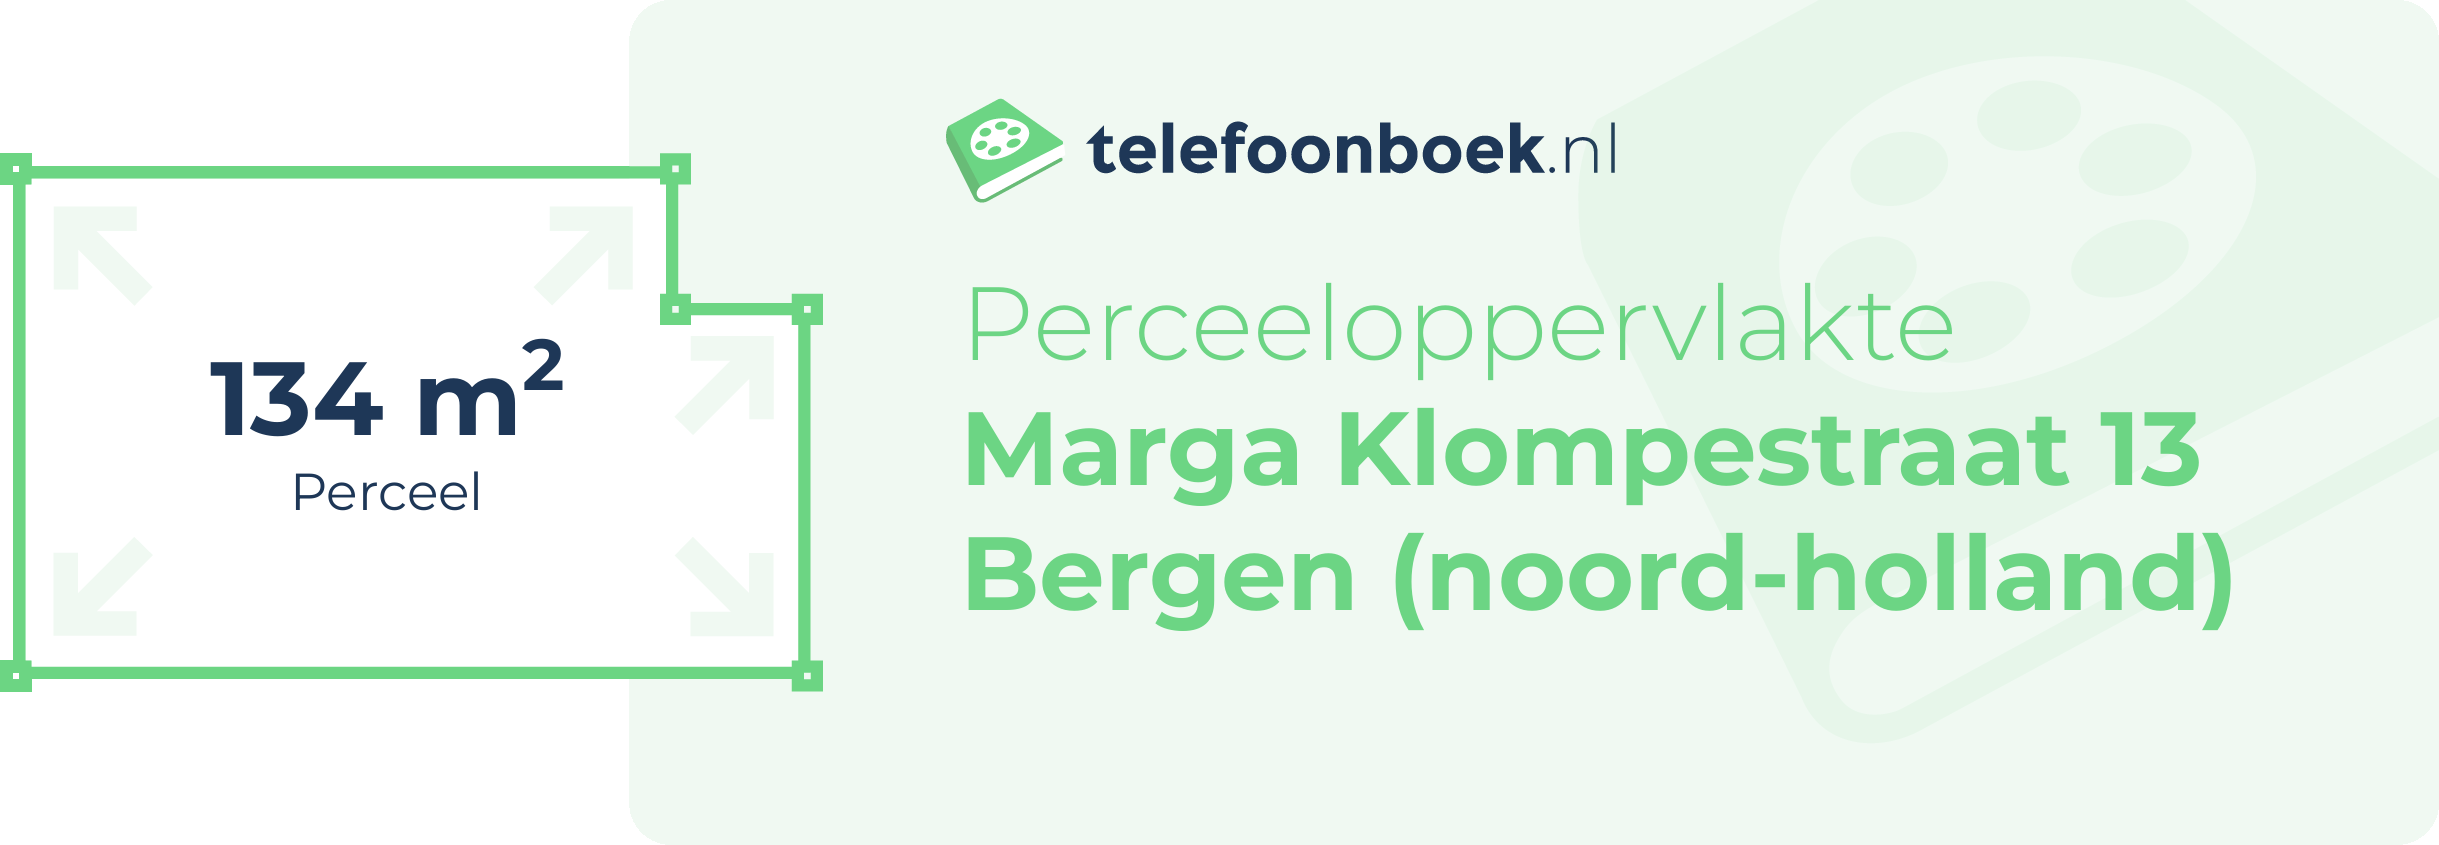 Perceeloppervlakte Marga Klompestraat 13 Bergen (Noord-Holland)